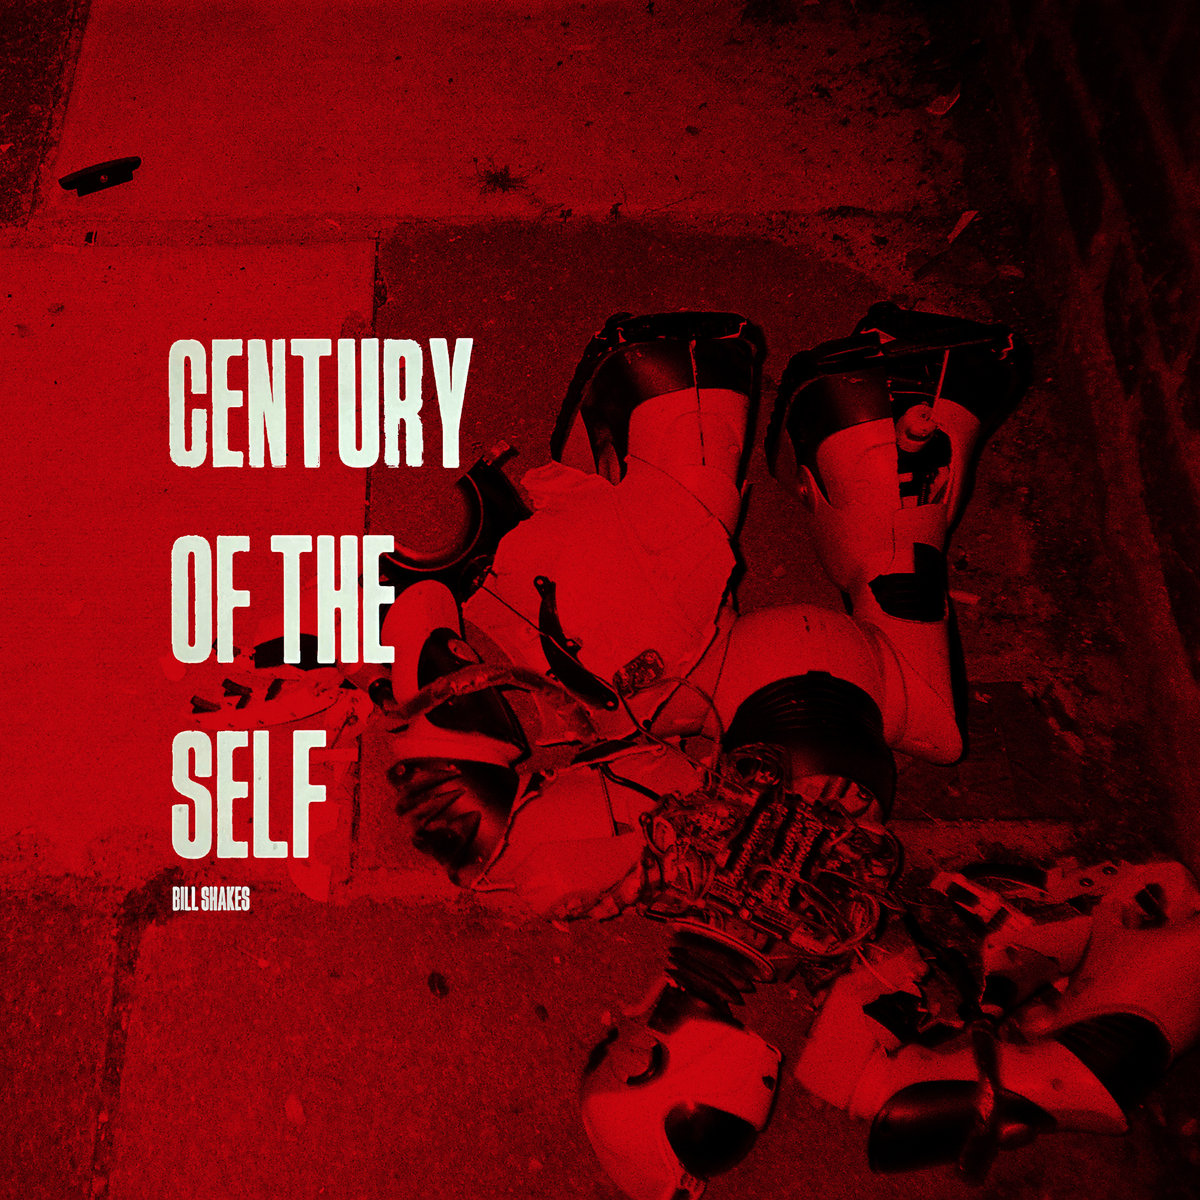 Century_of_the_self_bill_shakes